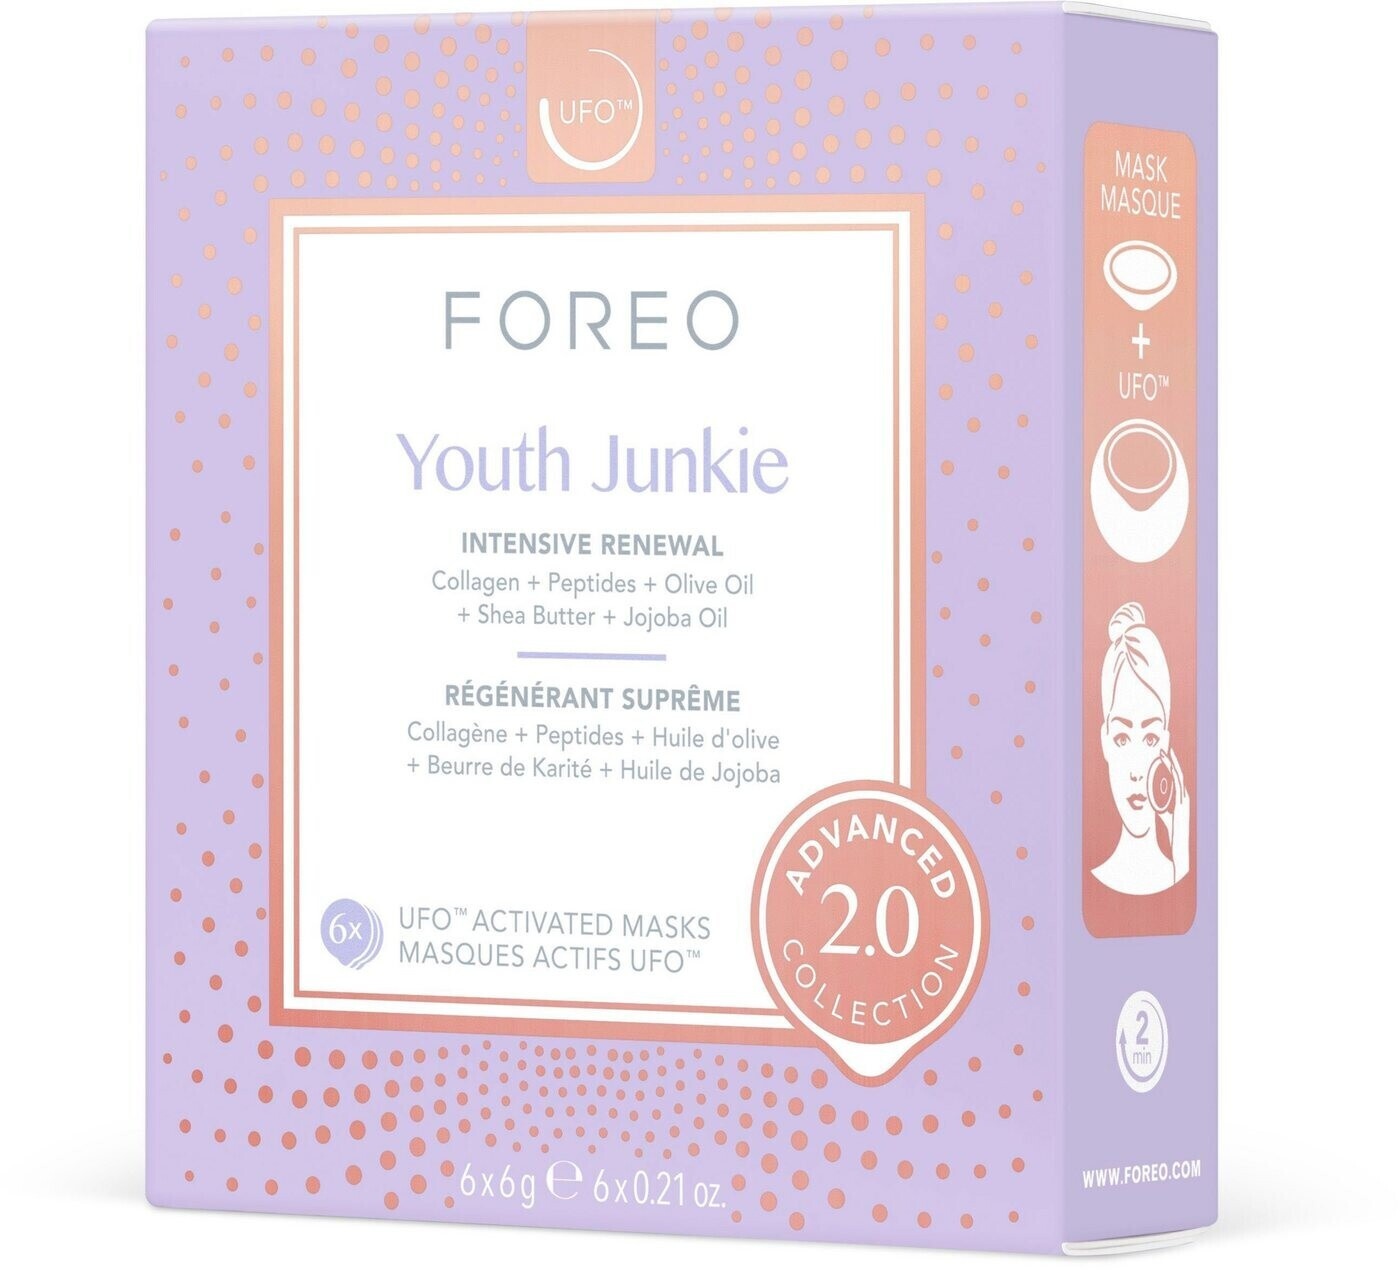 Foreo Youth Junkie 2.0 UFO Maskenpads (6x6 g) ab 20,95 € | Preisvergleich  bei